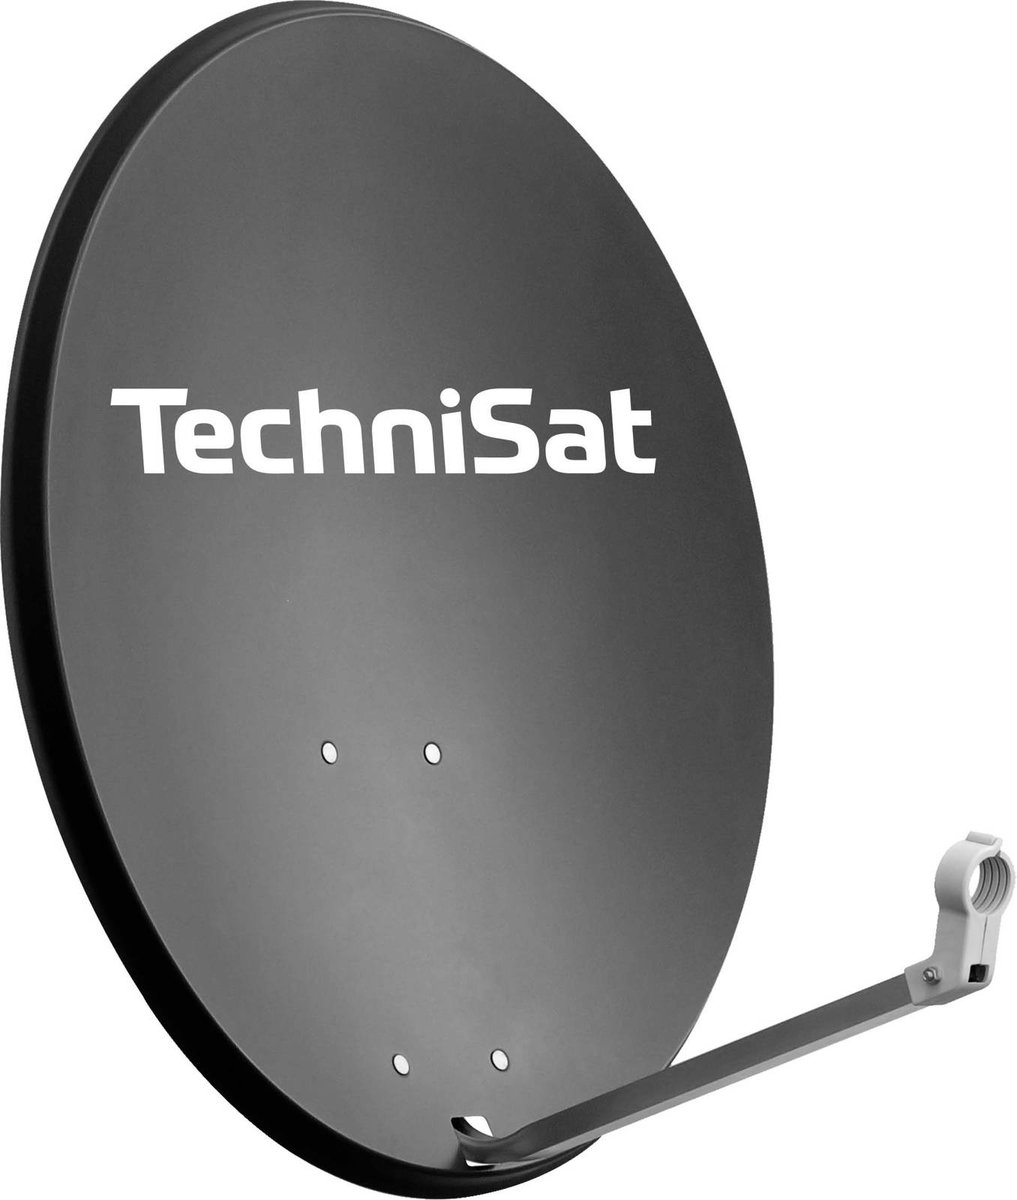 Zdjęcia - Antena telewizyjna TechniSat Antena satelitarna 80  grafit pakiet 5 szt. 1080/0530 